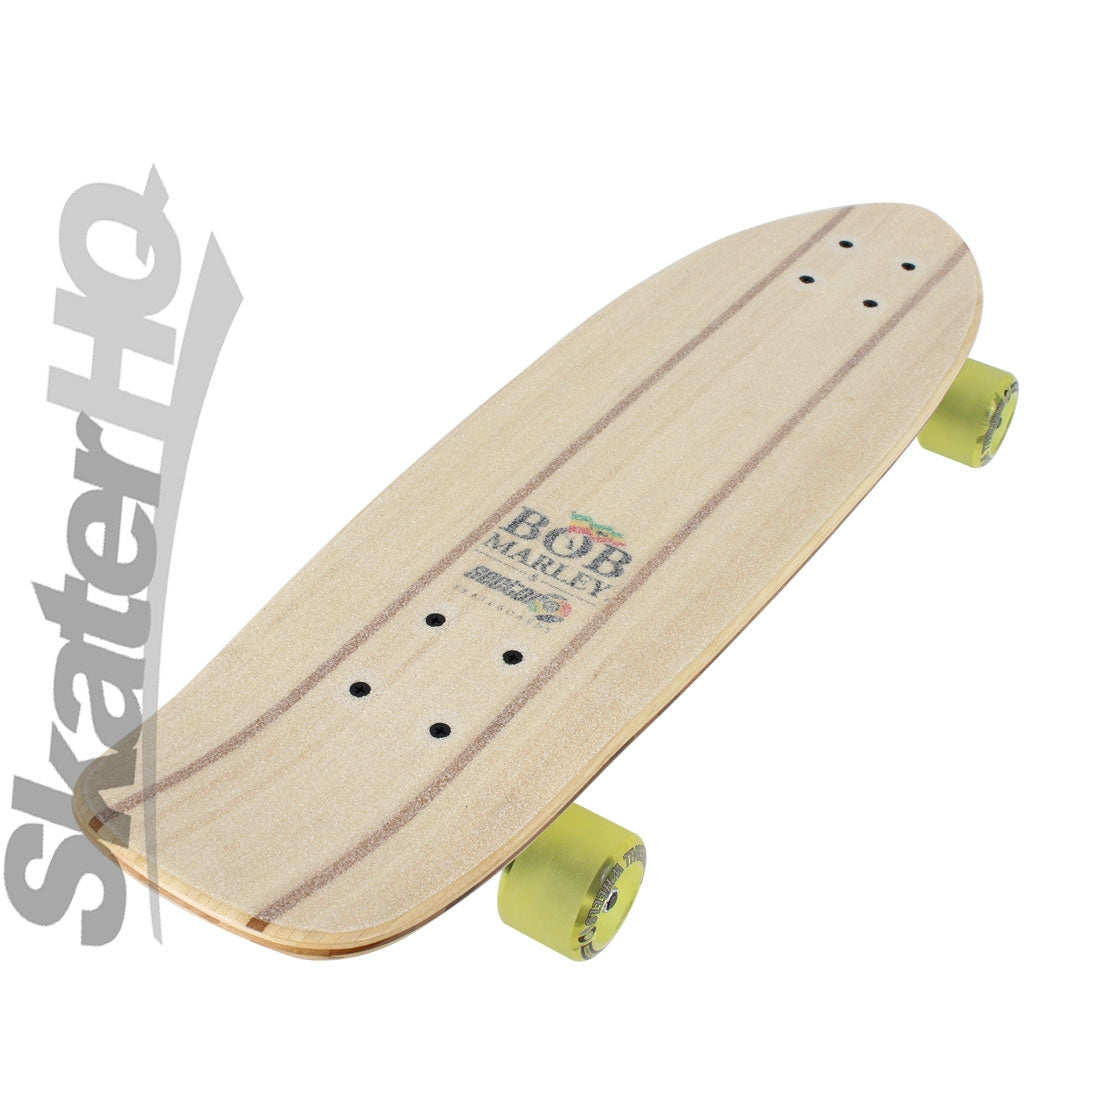 Sector 9 Natty Dread Bamboo Cruiser Complete Skateboard Compl Cruisers